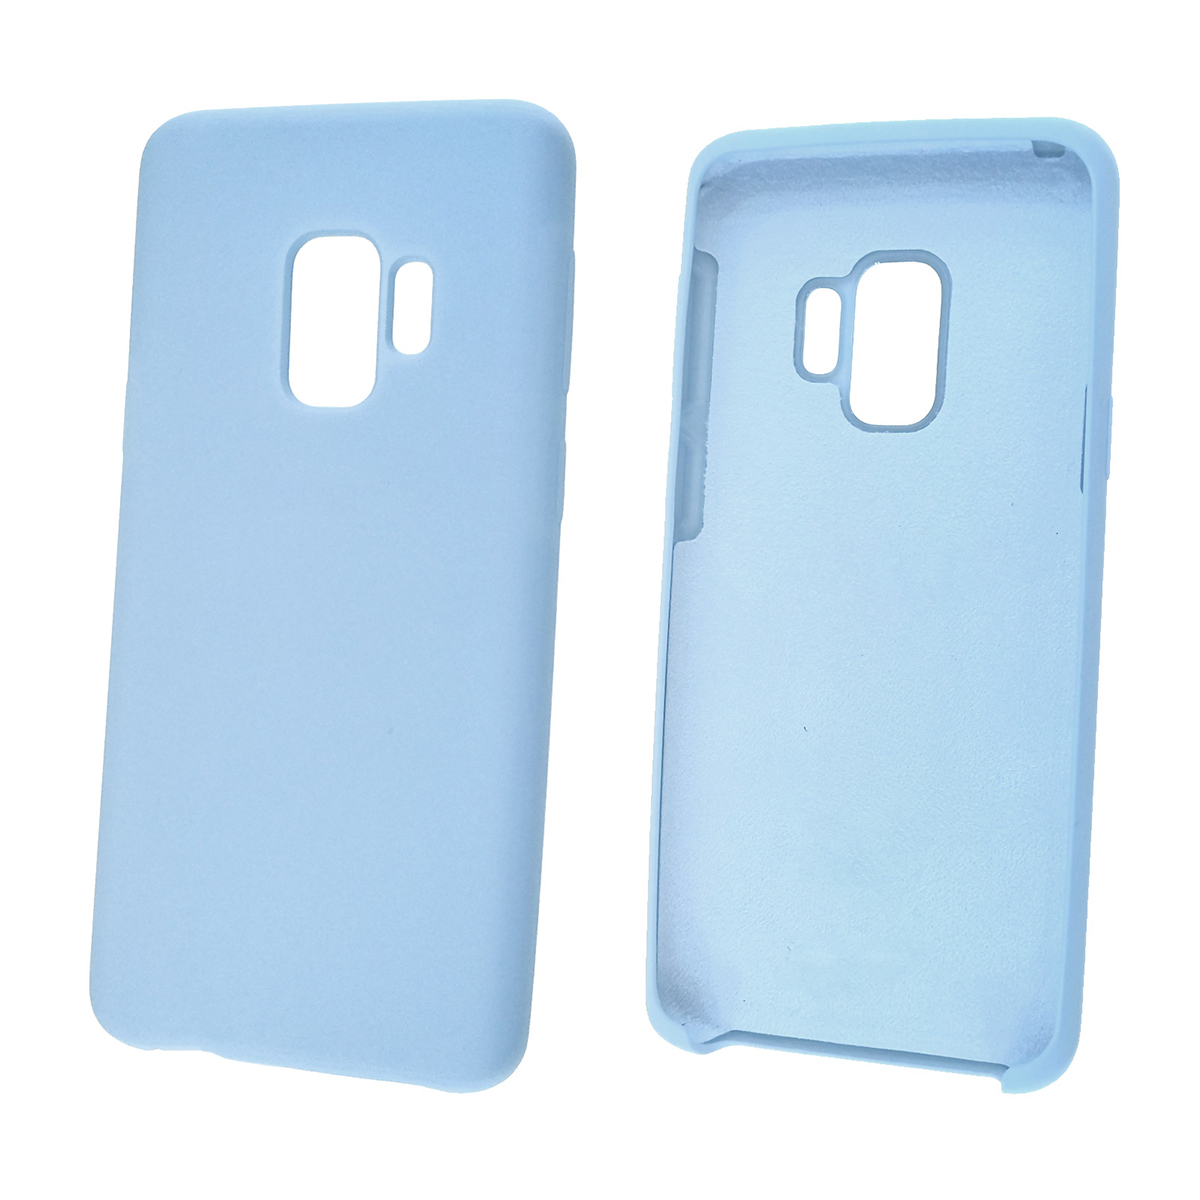 Чехол накладка Silicon Cover для SAMSUNG Galaxy S9 (SM-G960), силикон, бархат, цвет голубой.